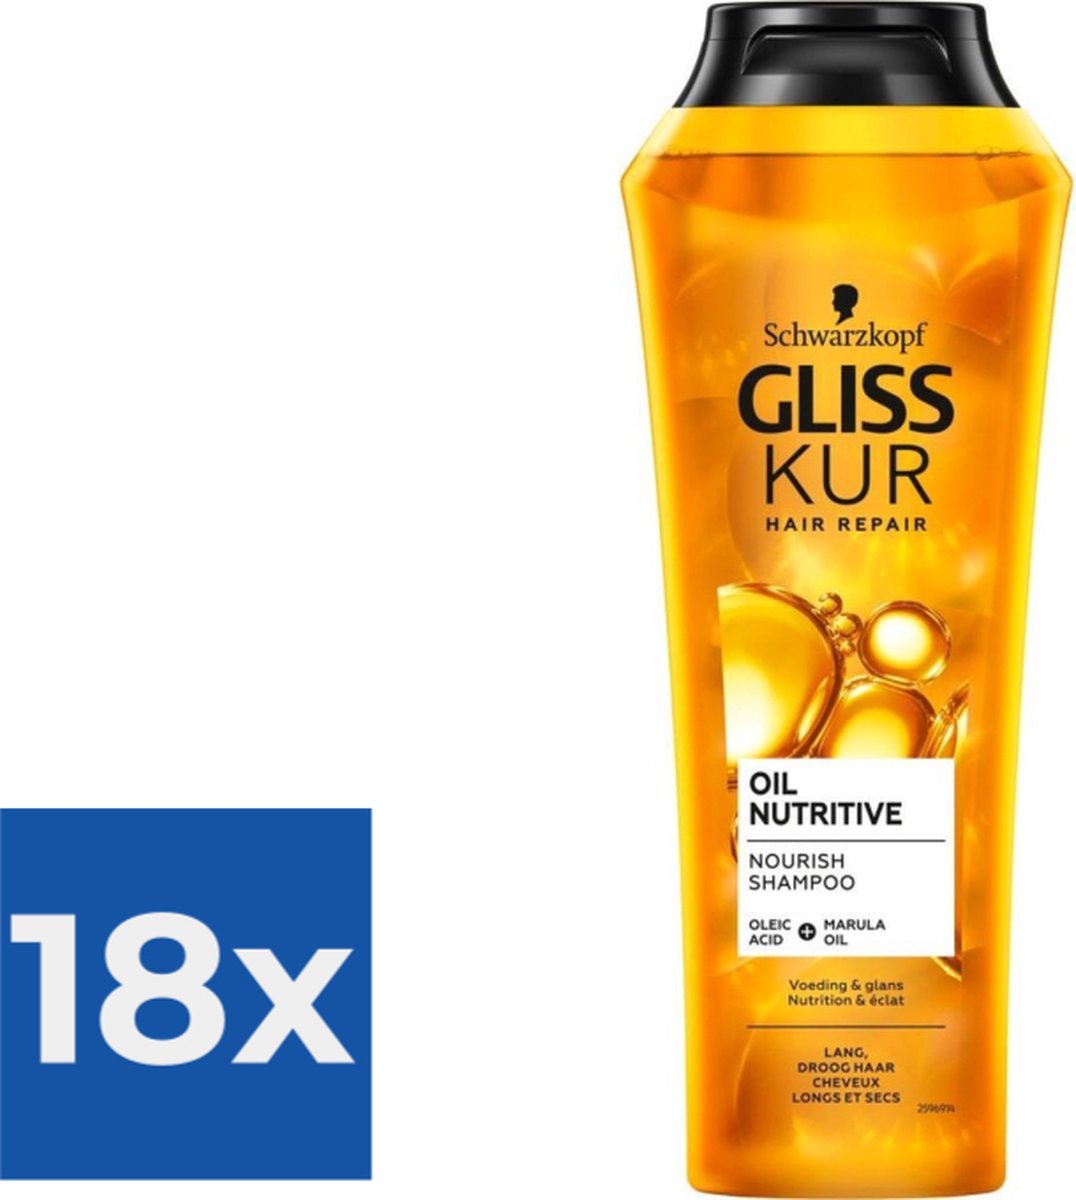 Gliss Kur Shampoo Oil Nutritive 250 ml - Voordeelverpakking 18 stuks